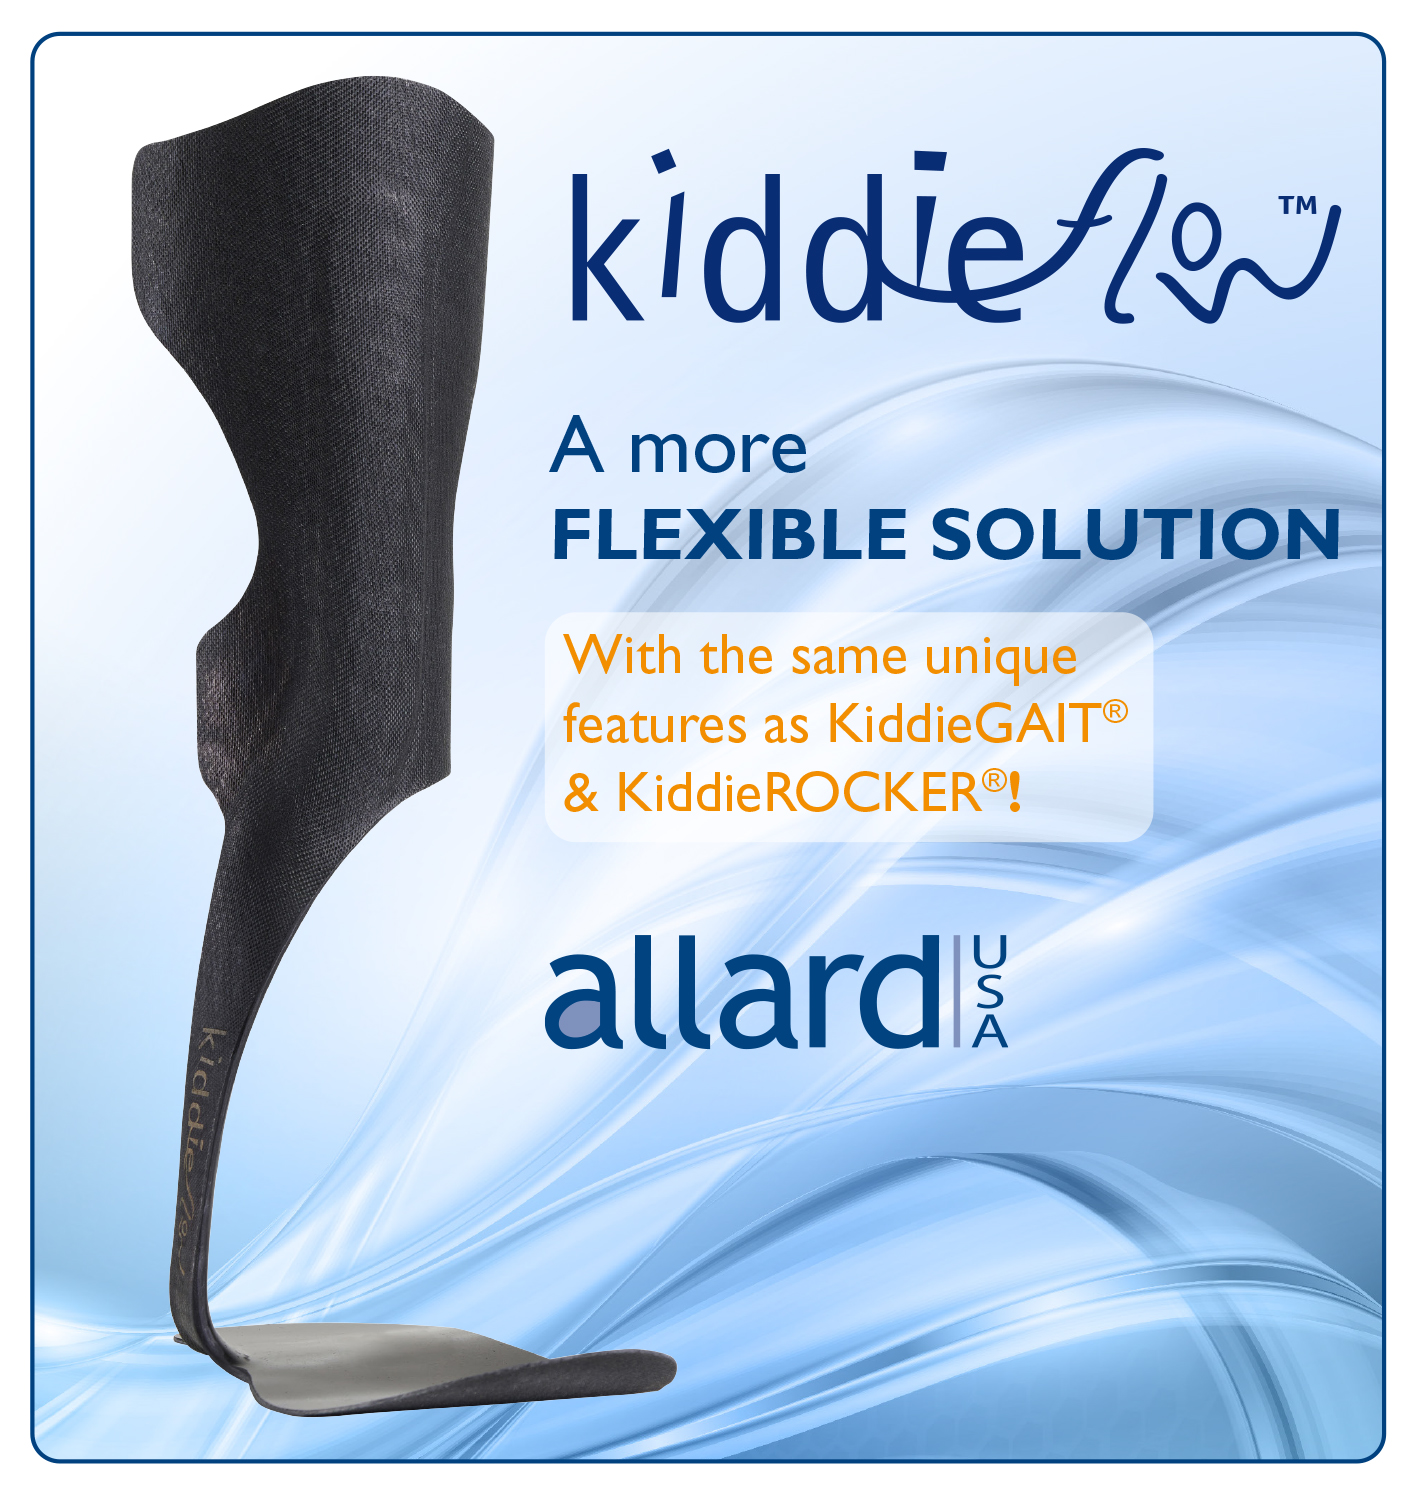 Allard USA Introduces KiddieFLOW™